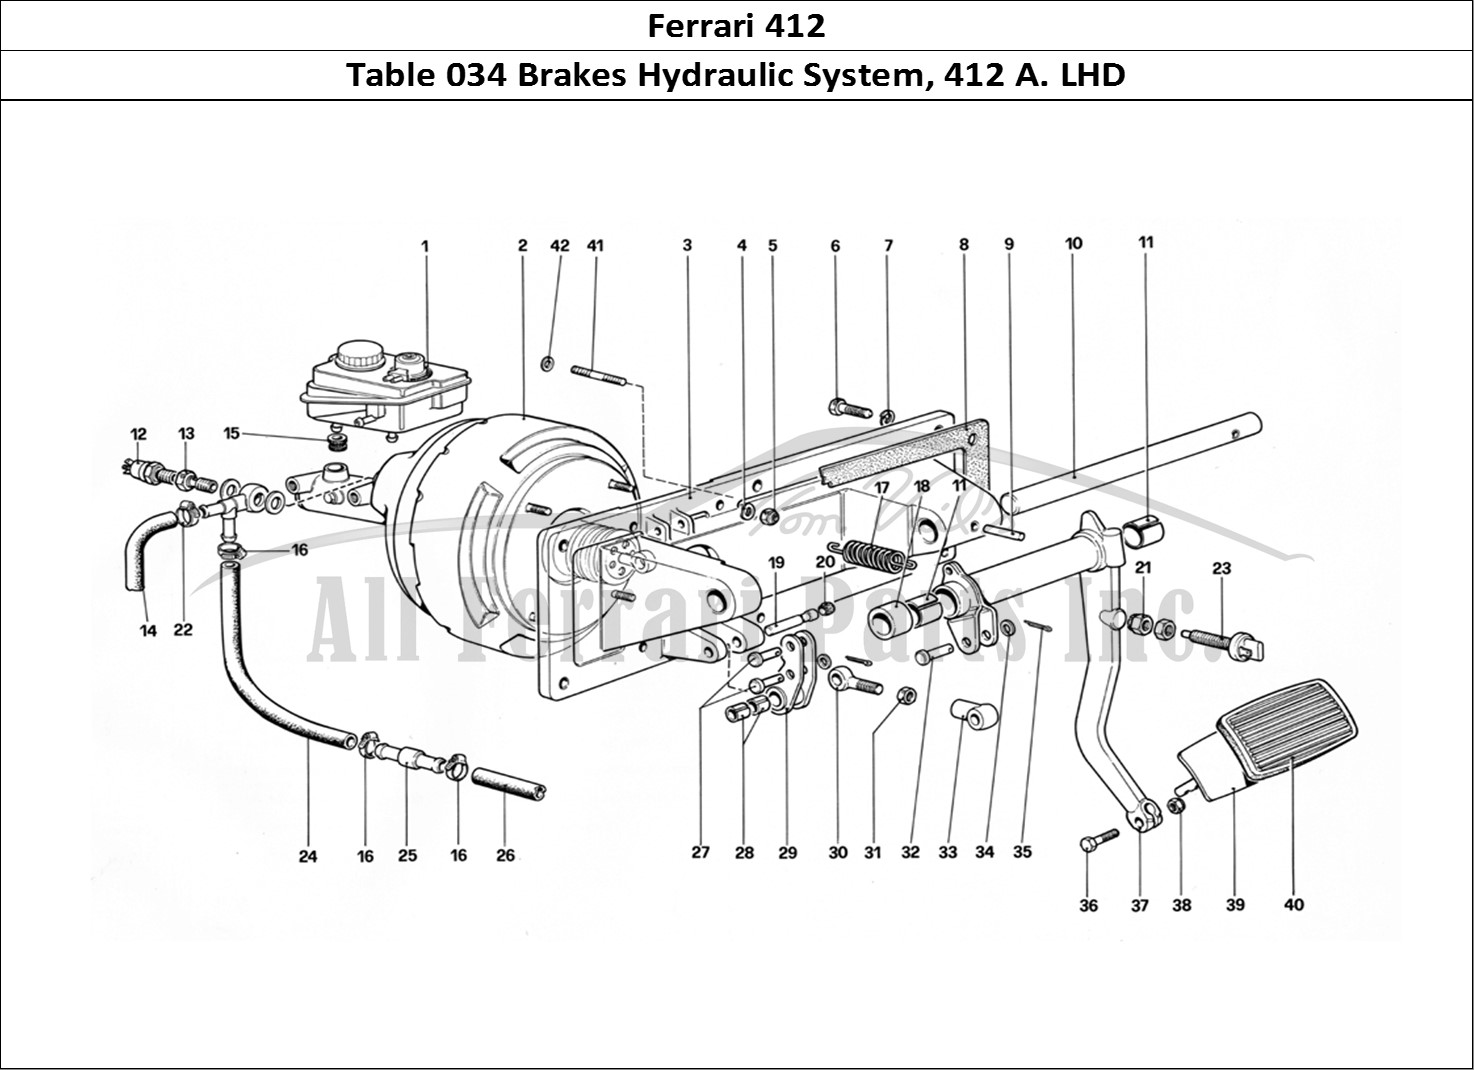 Ferrari Parts Ferrari 412 (Mechanical) Page 034 Brakes Hydraulic Control